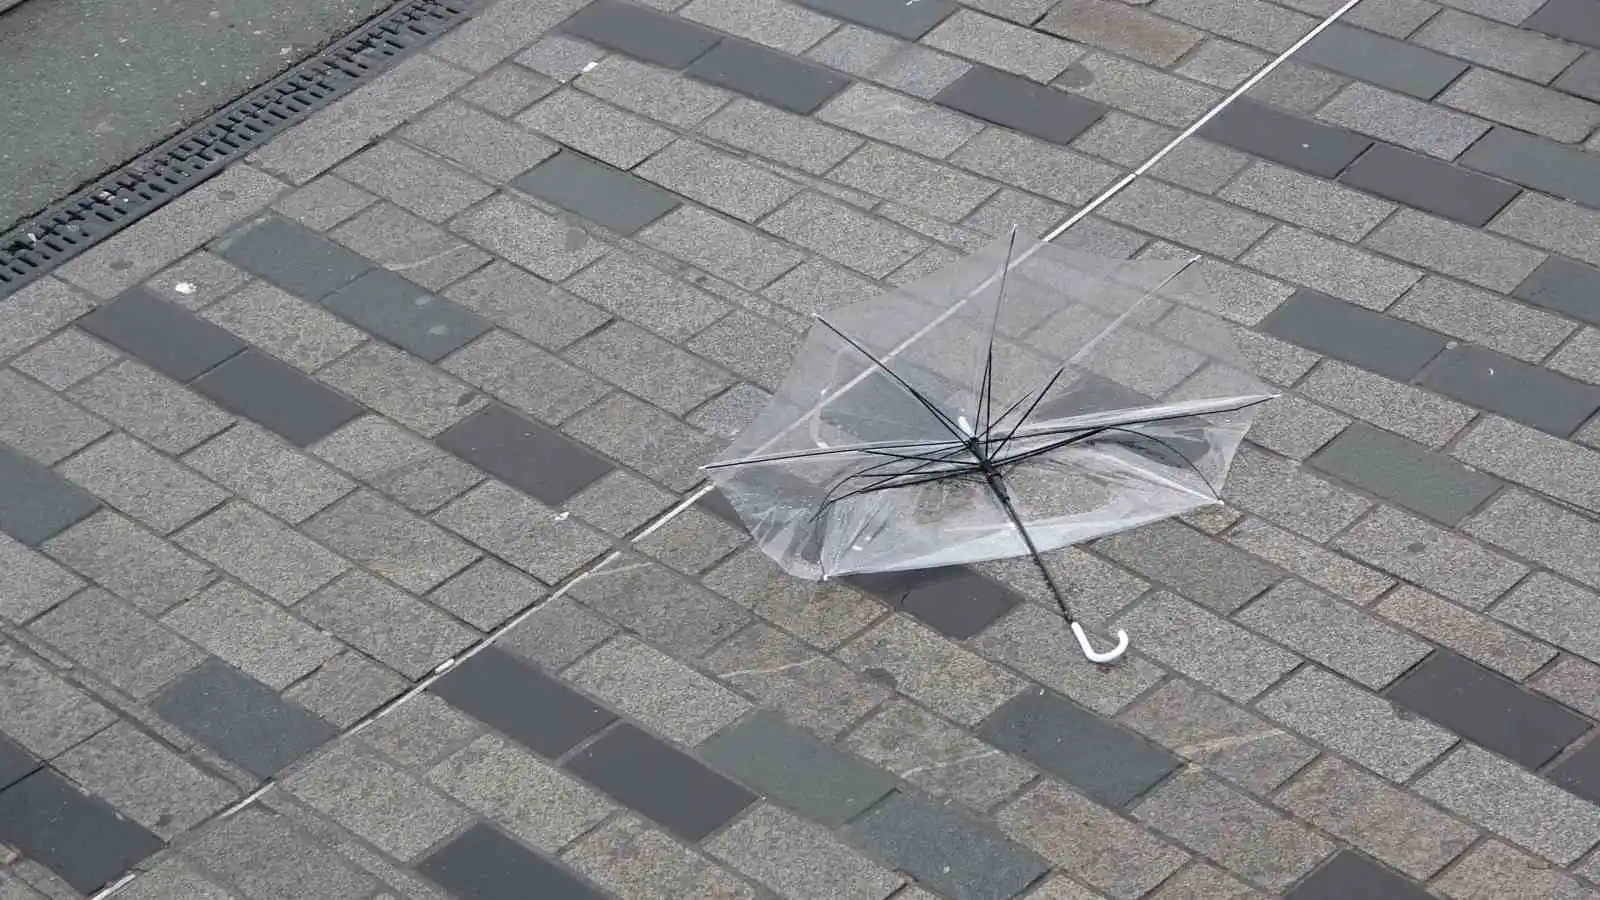 Taksim’de kuvvetli rüzgar ile yağış vatandaşlara zor anlar yaşattı
